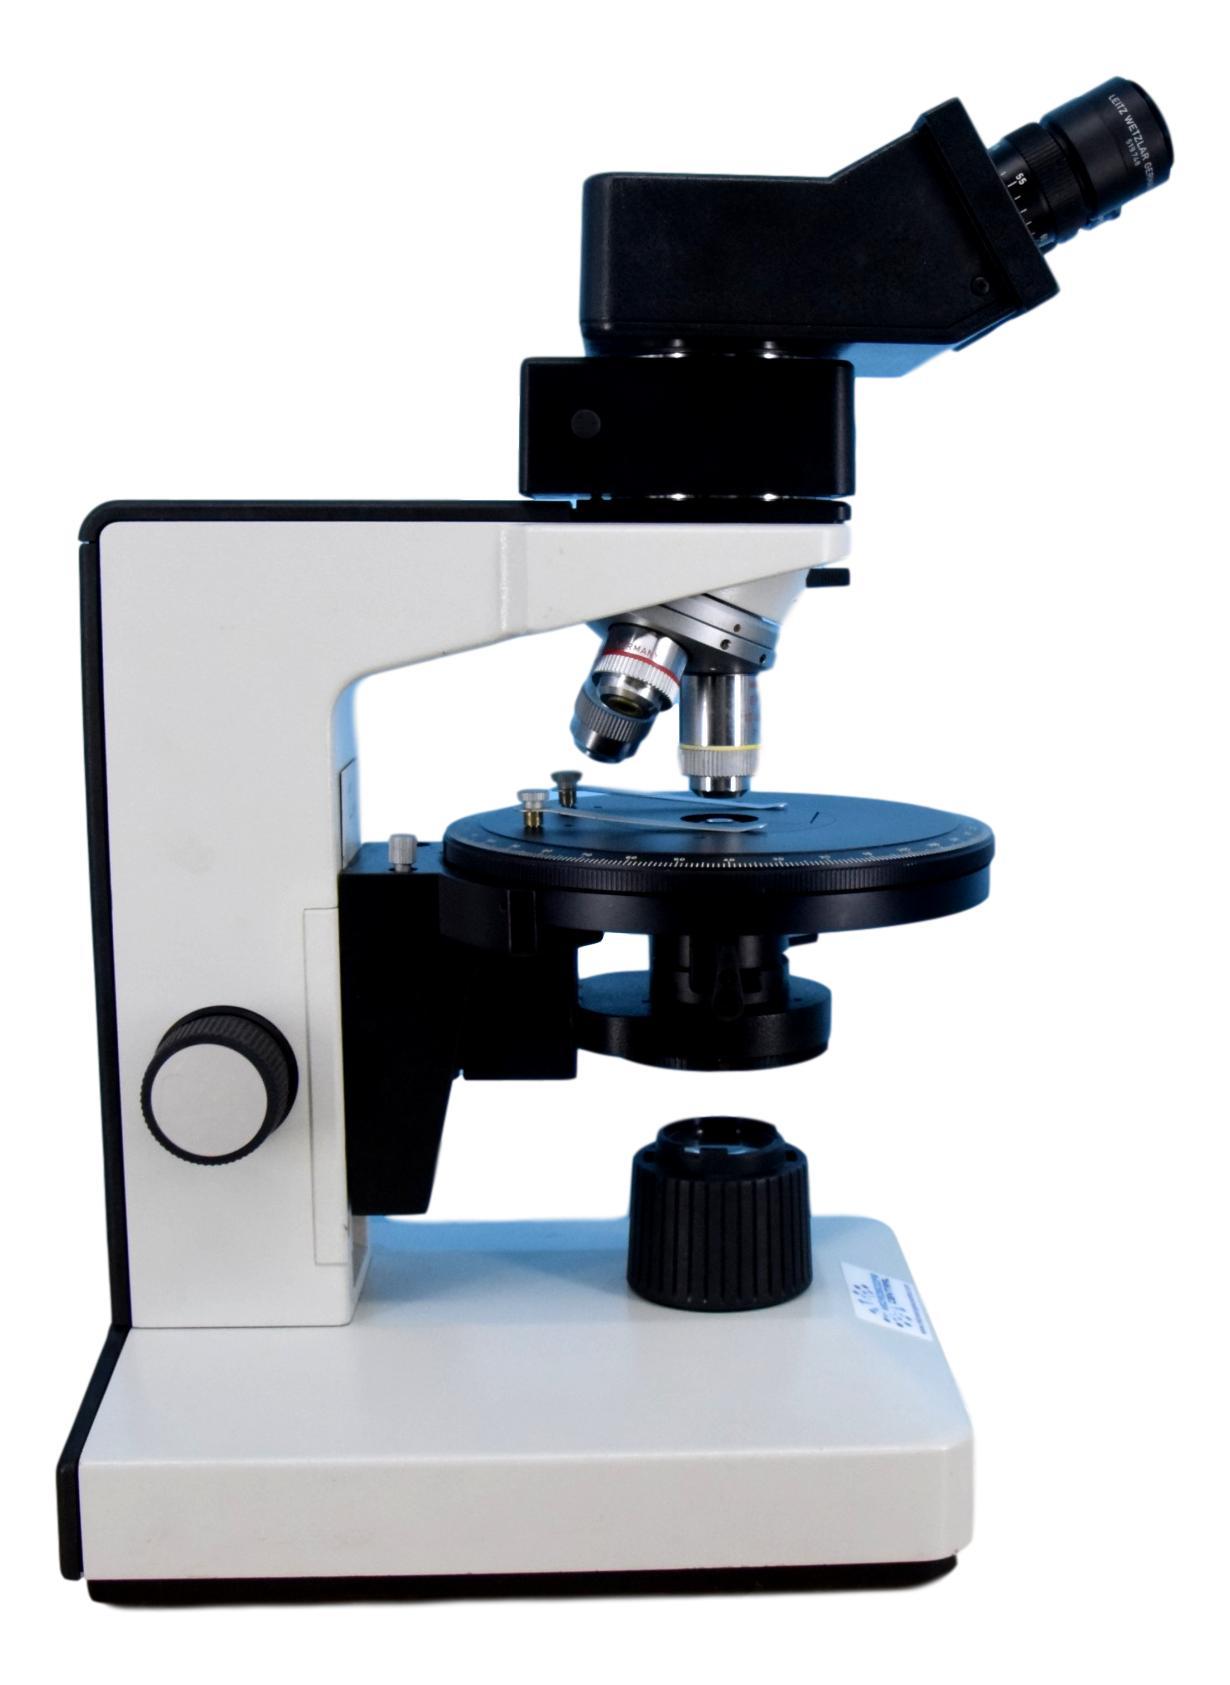 Leitz LaborLux 11 POL Polarizing Light Microscope